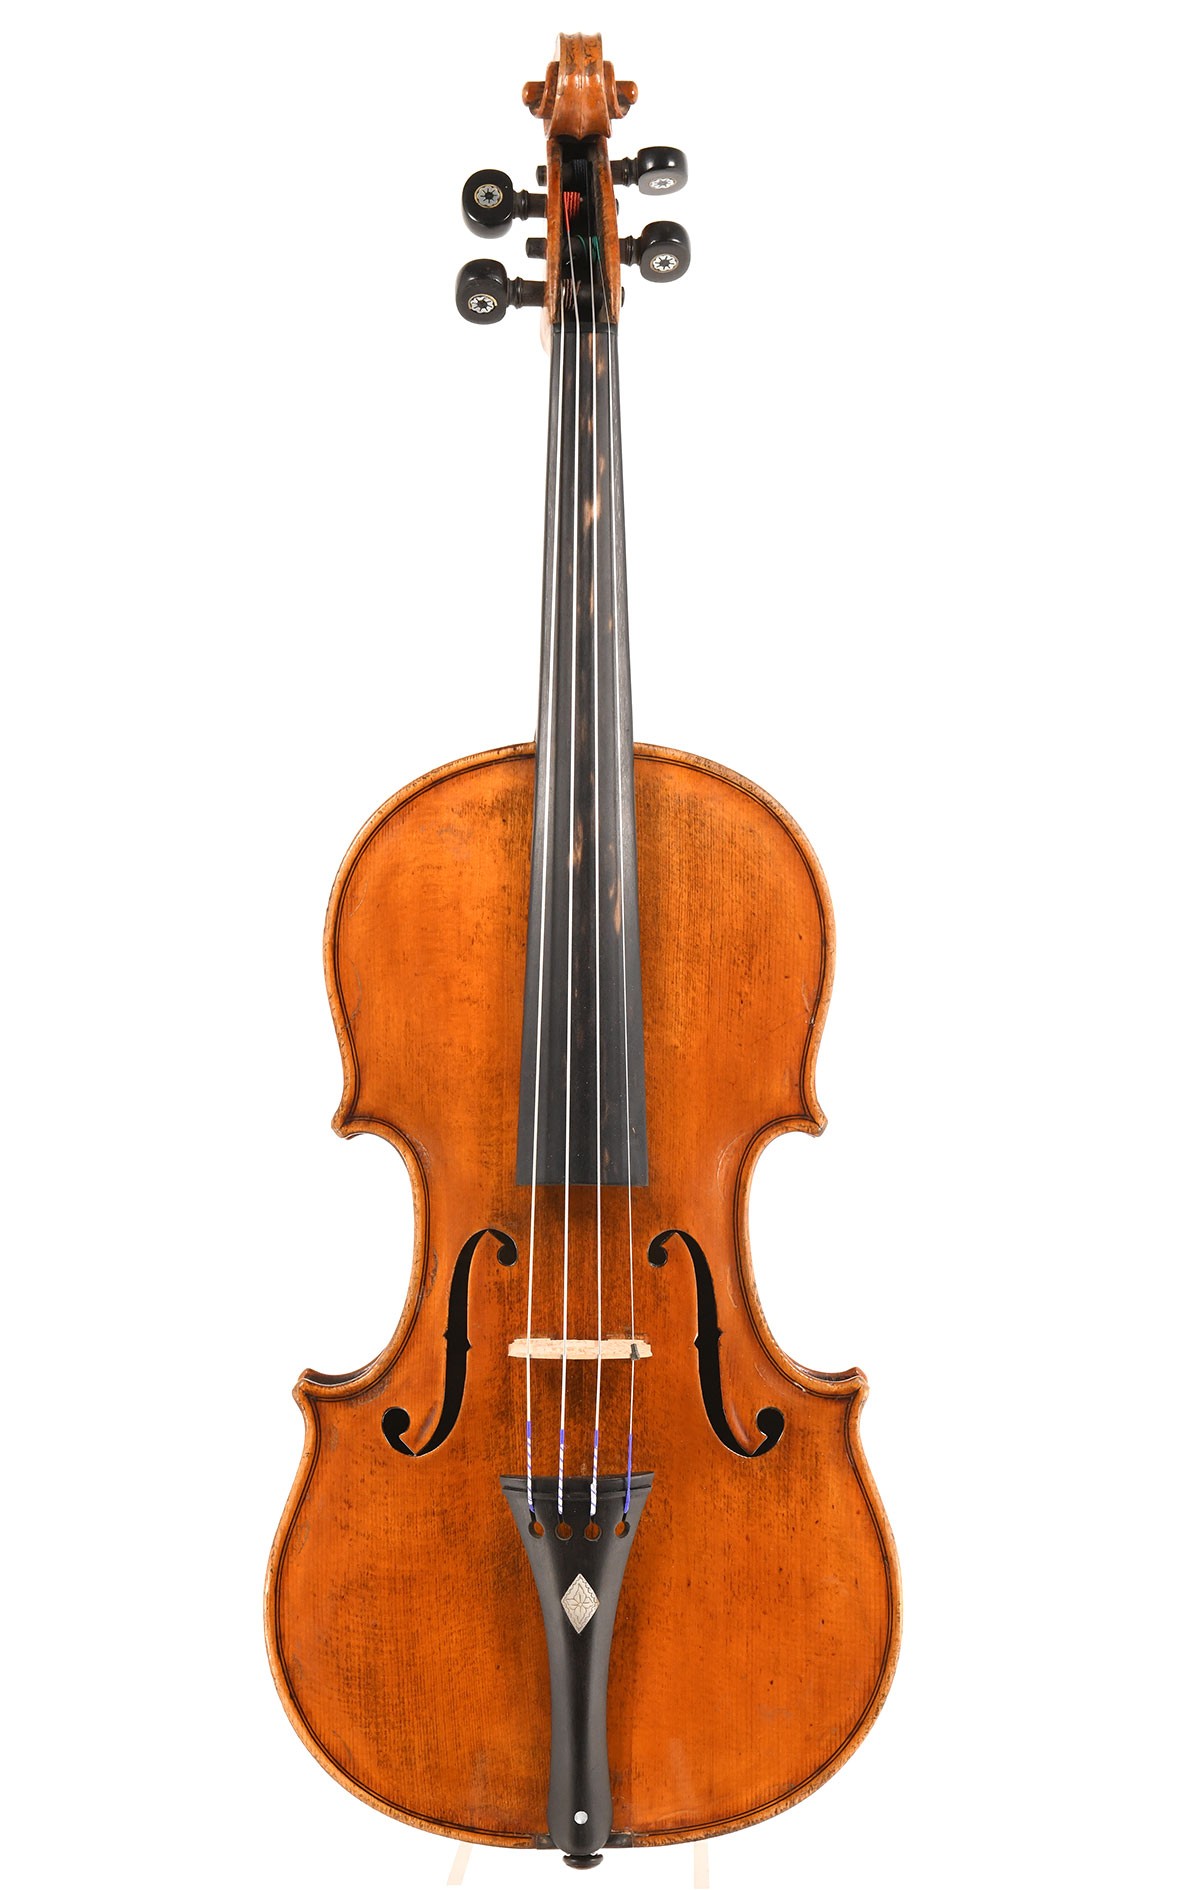 Fine baroque violin by Jean Nicolas Lambert around 1750